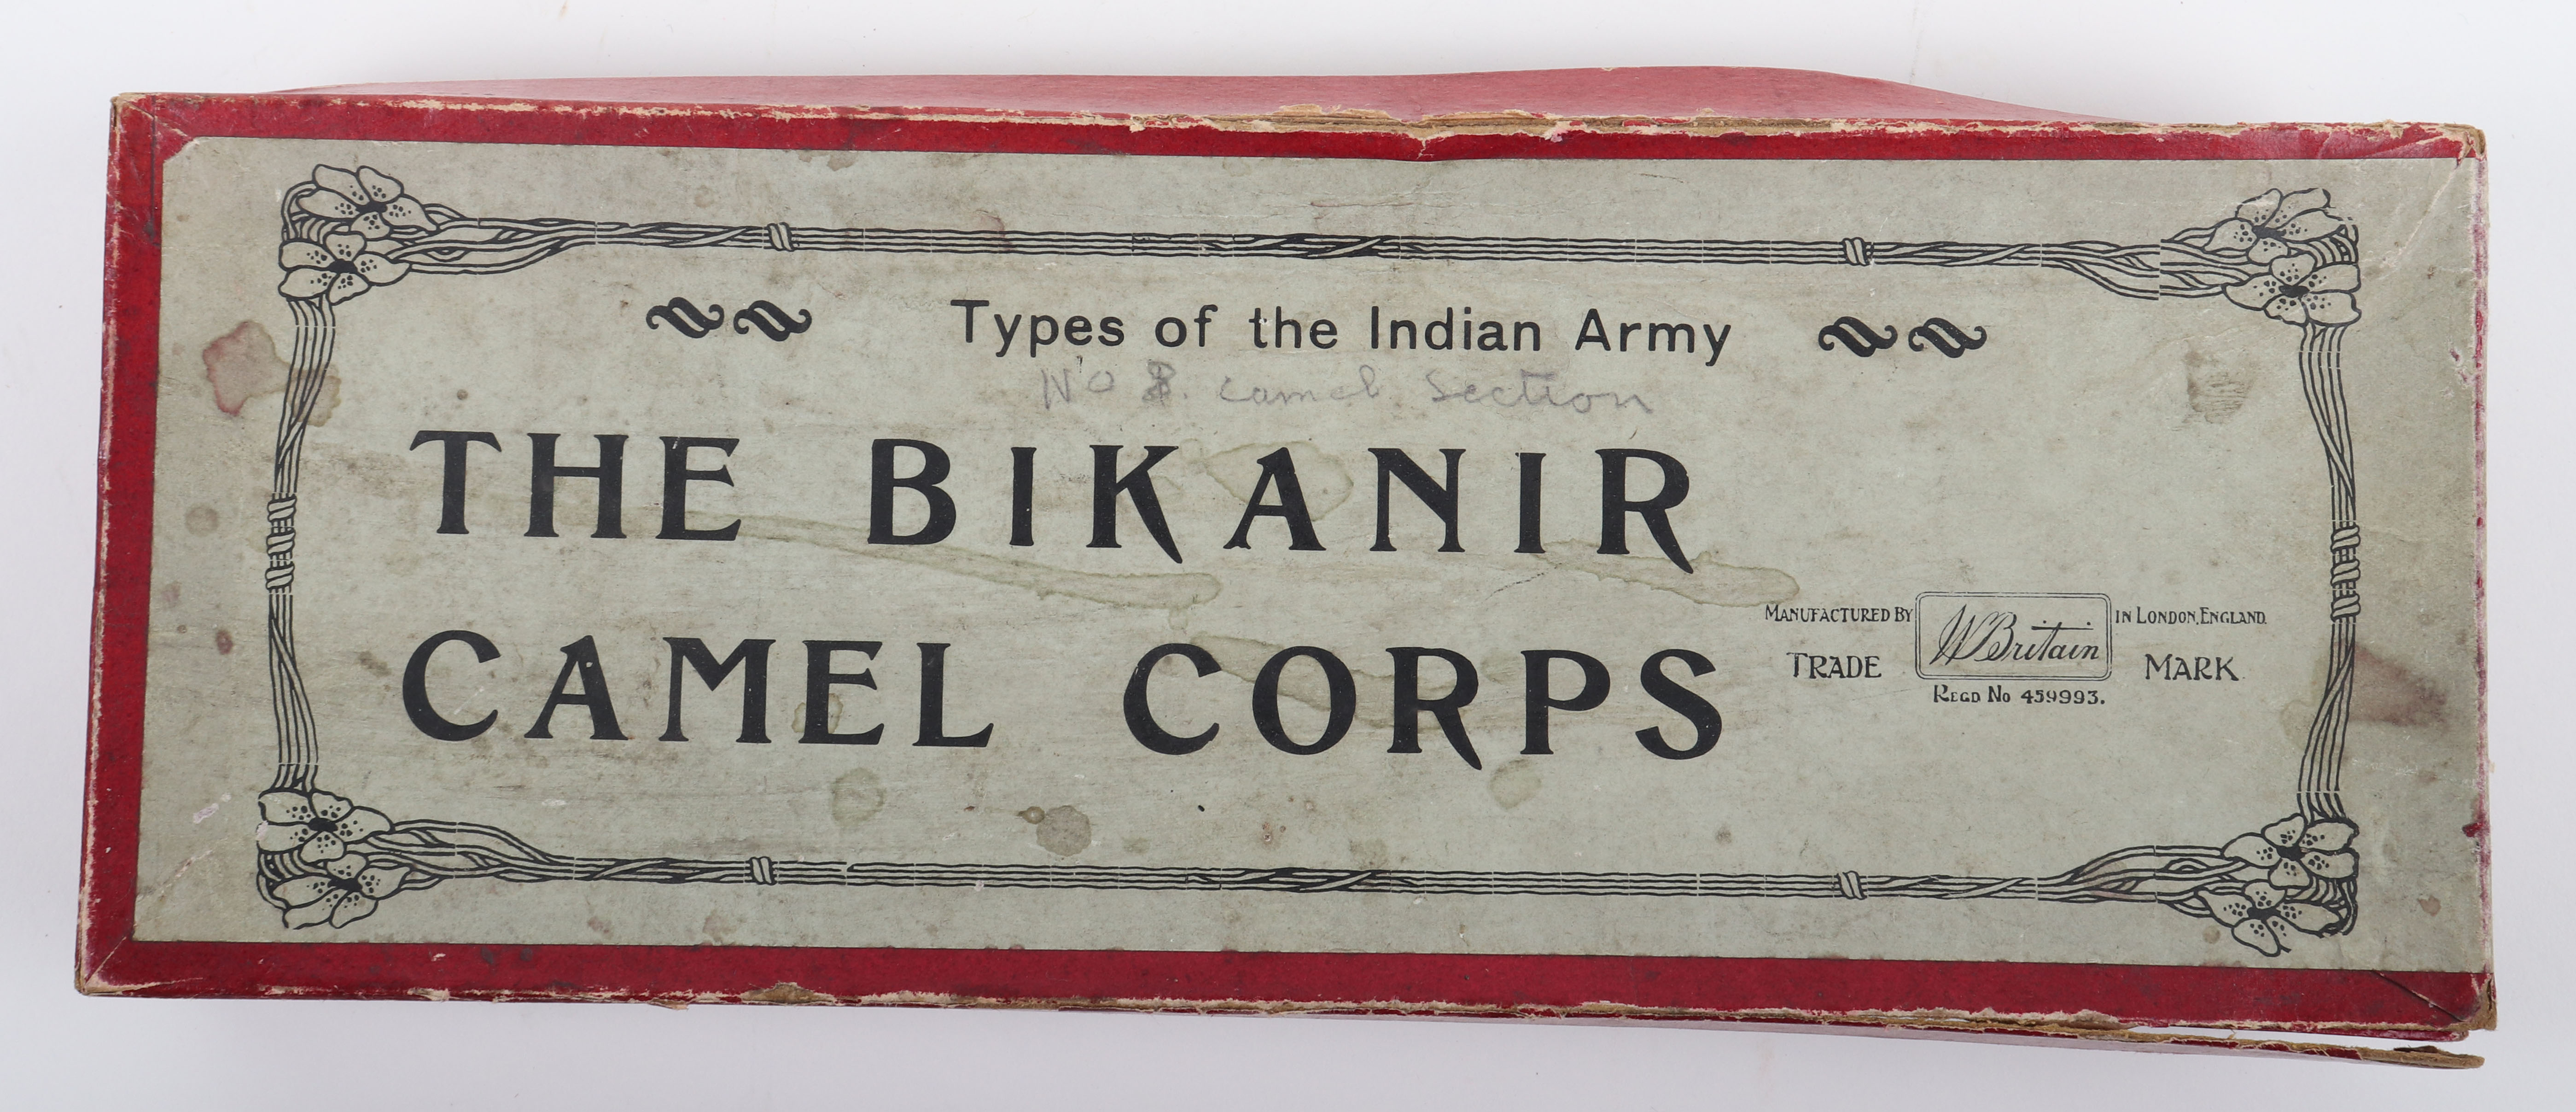 Britains set 123 Bikanir Camel Corps - Image 4 of 4